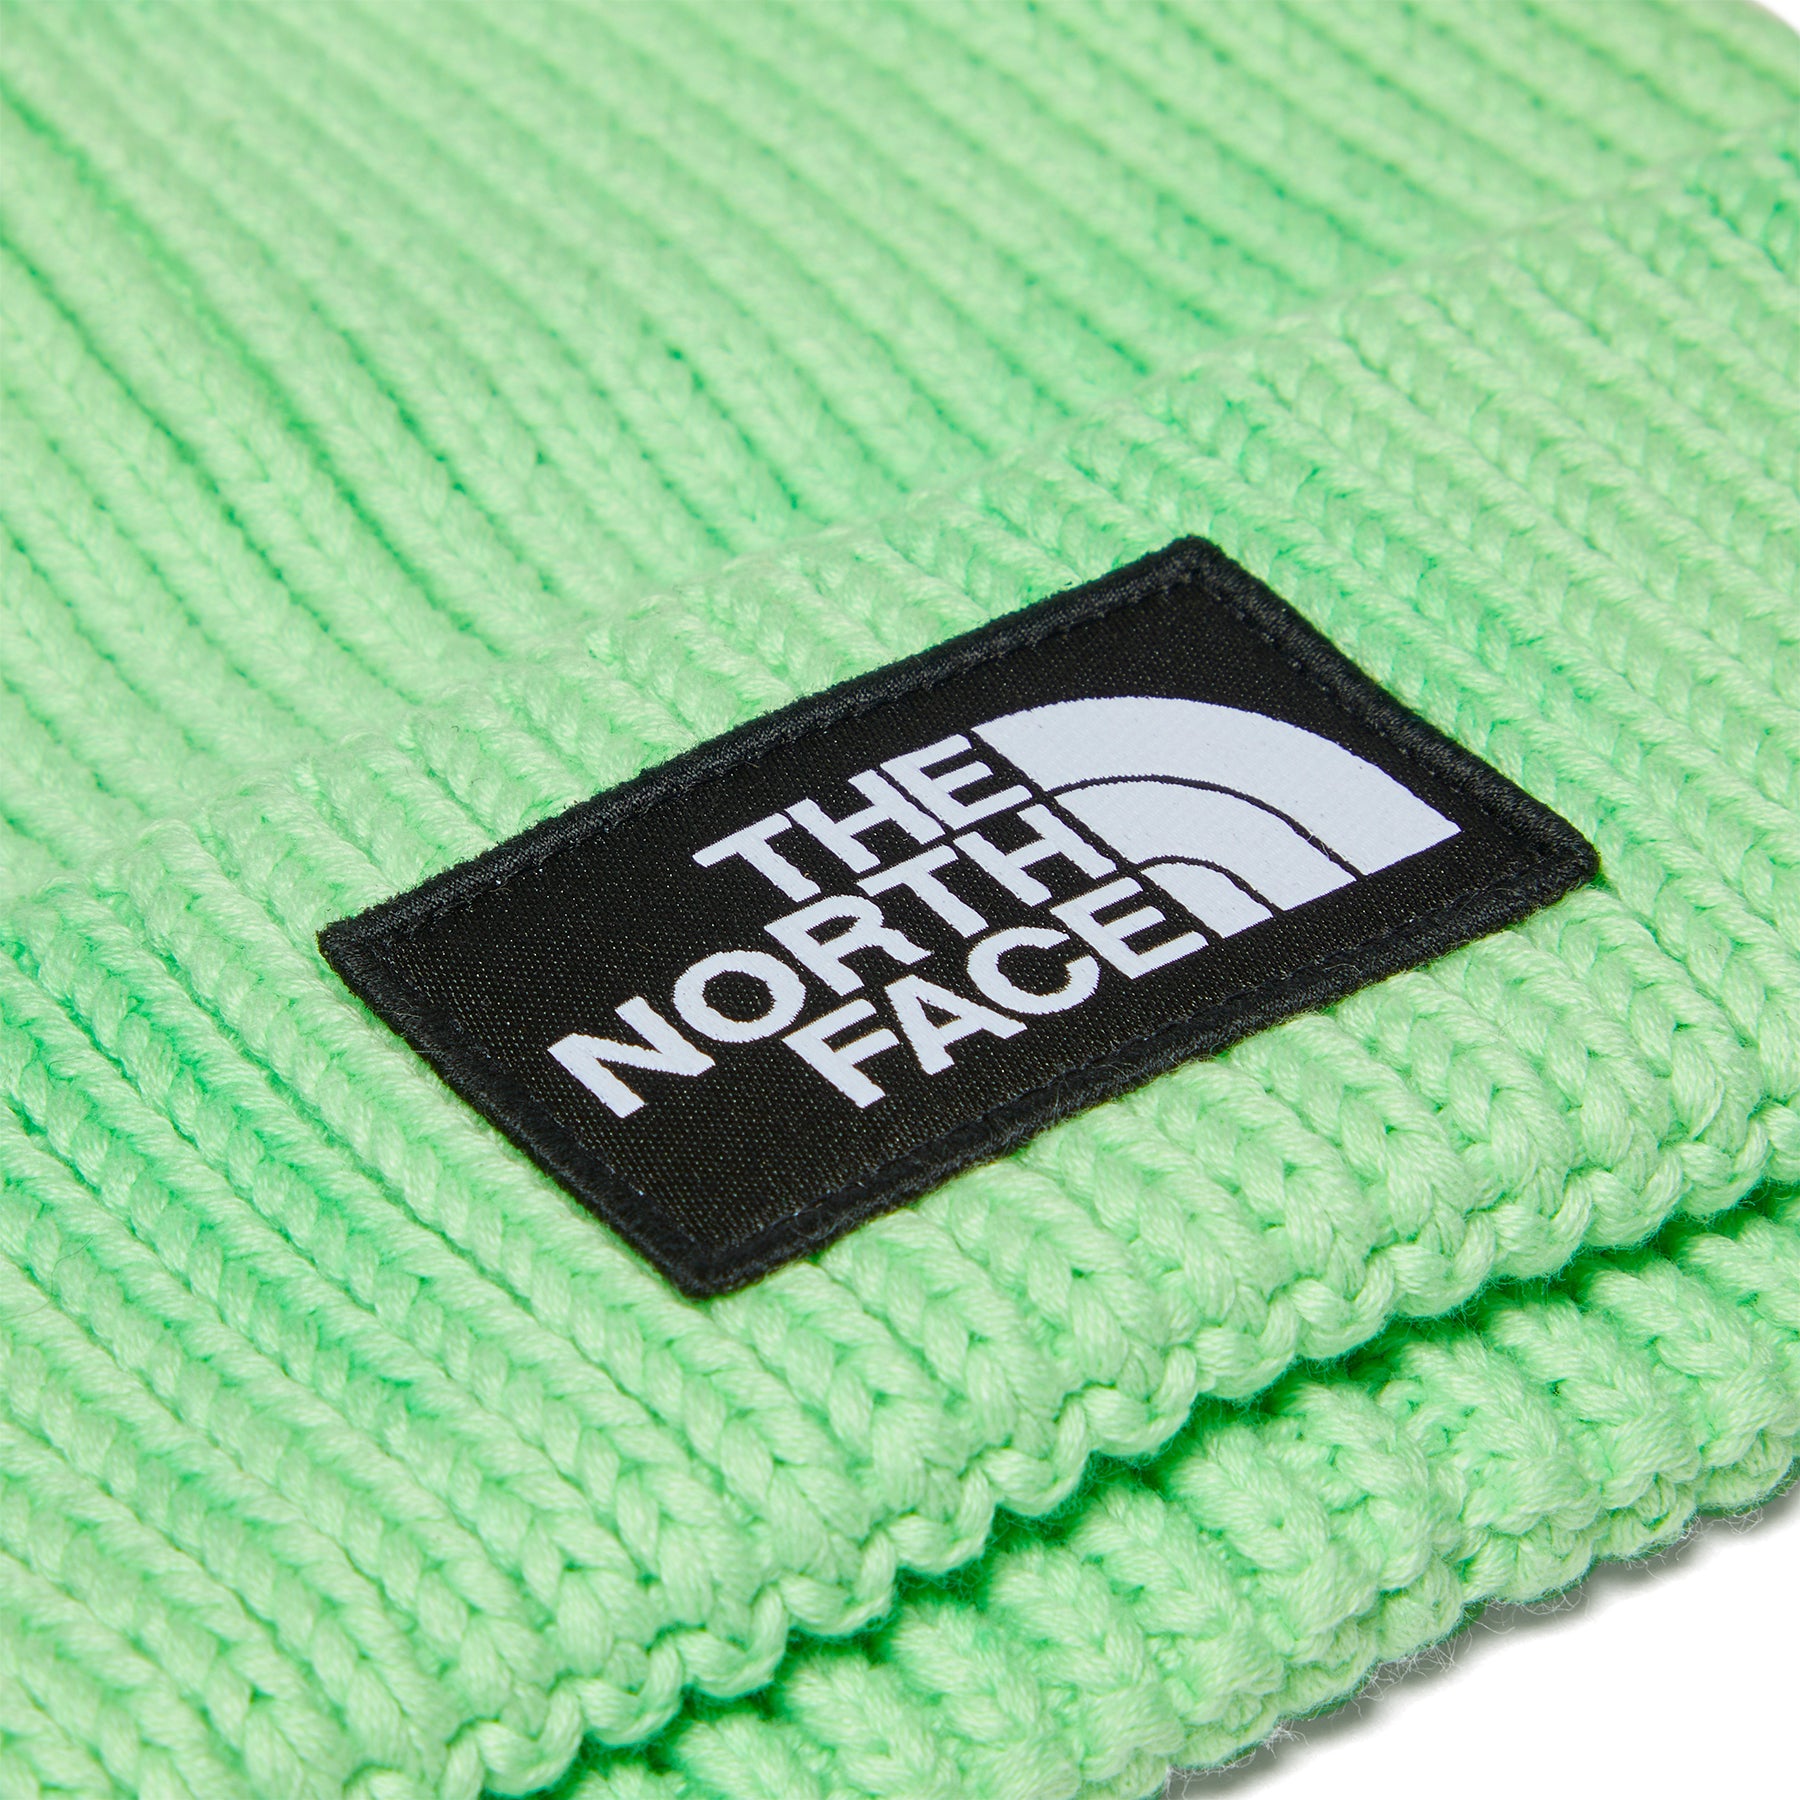 Soldes Bonnet TNF Logo Box Cuffed Gris The North Face à -20%